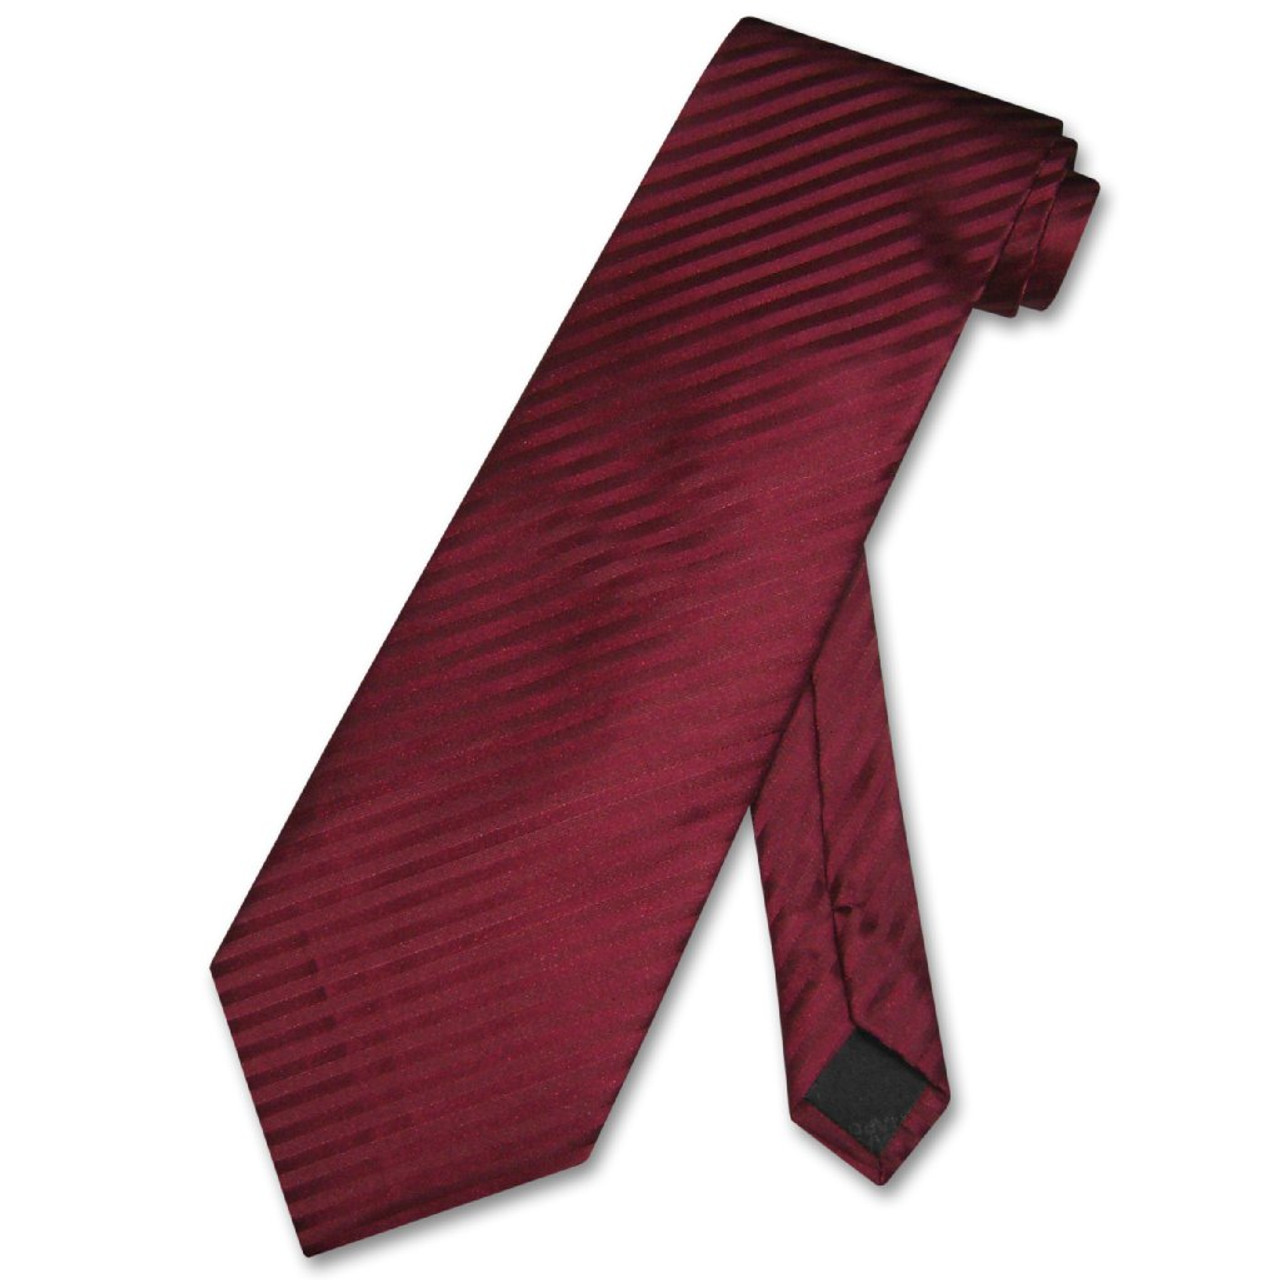 Mens Dress Vest & NeckTie Burgundy Color Vertical Striped Neck Tie Set